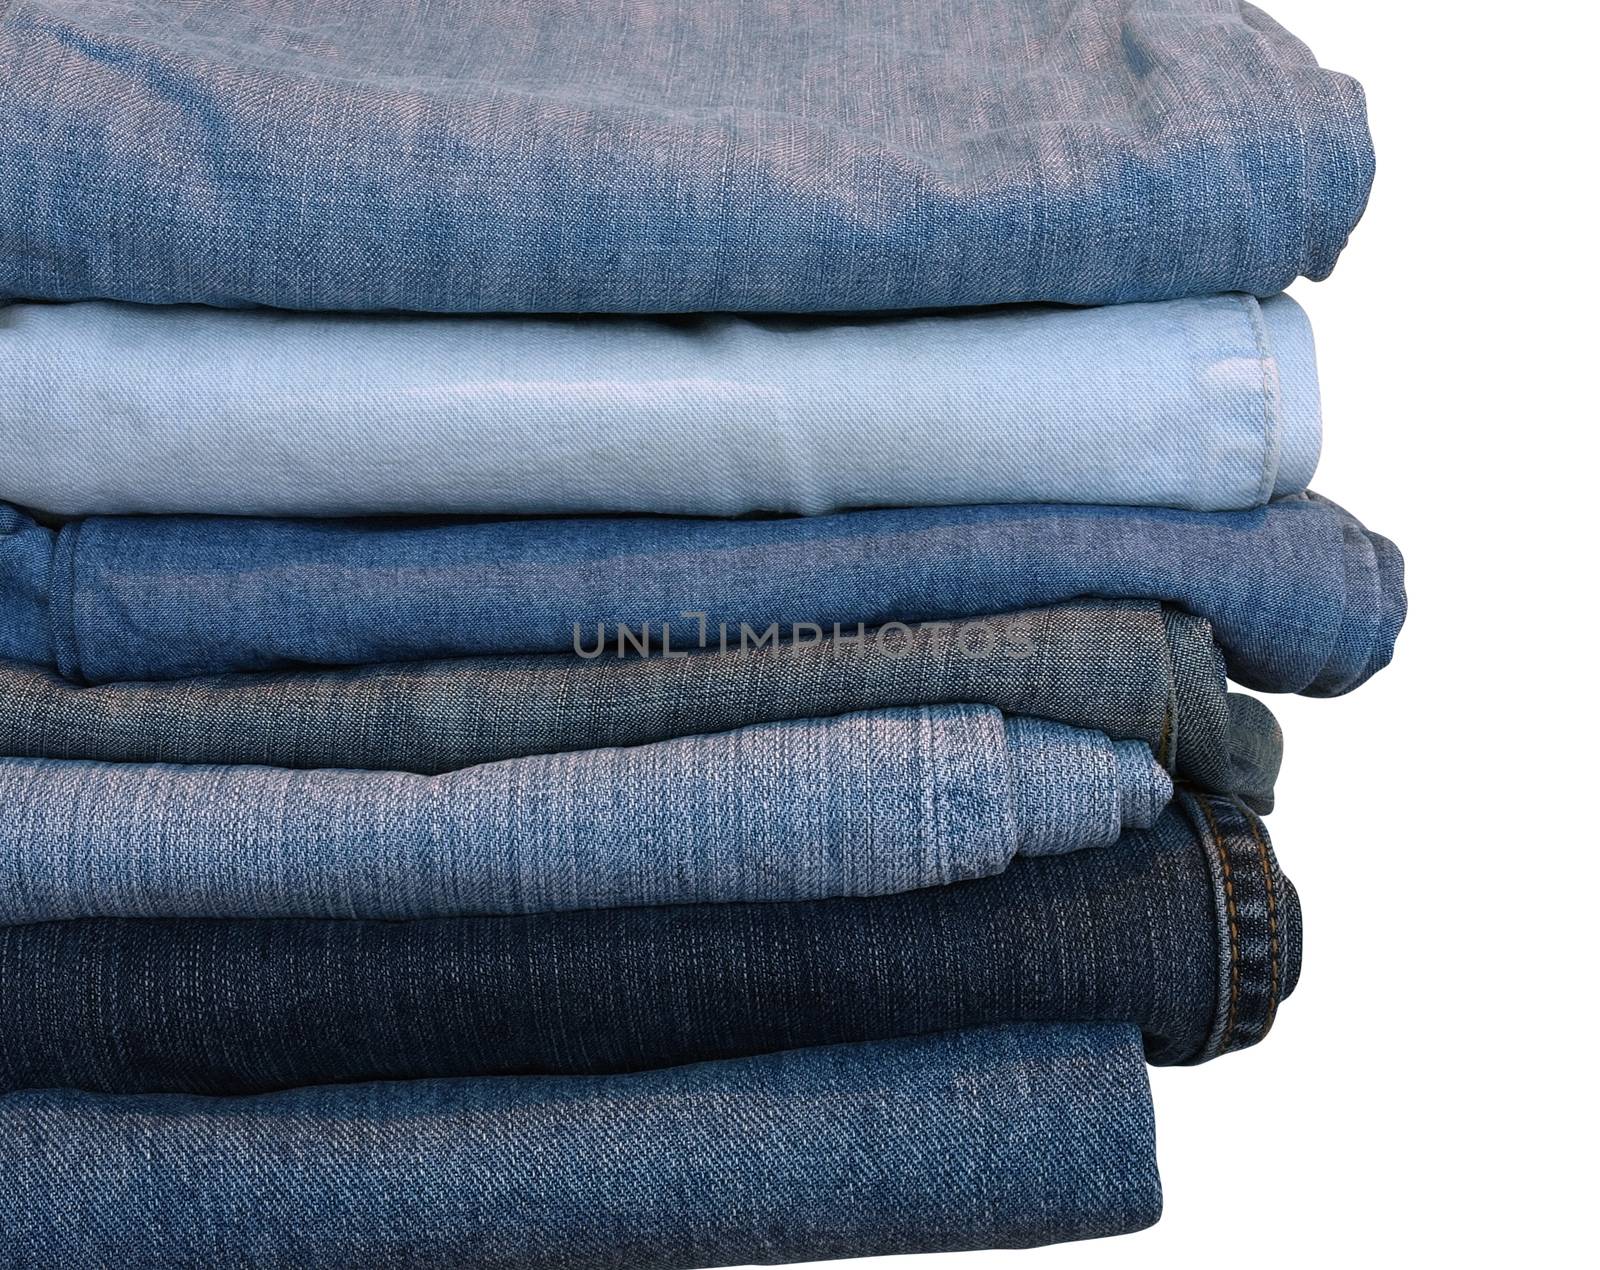 Jeans stack by Venakr